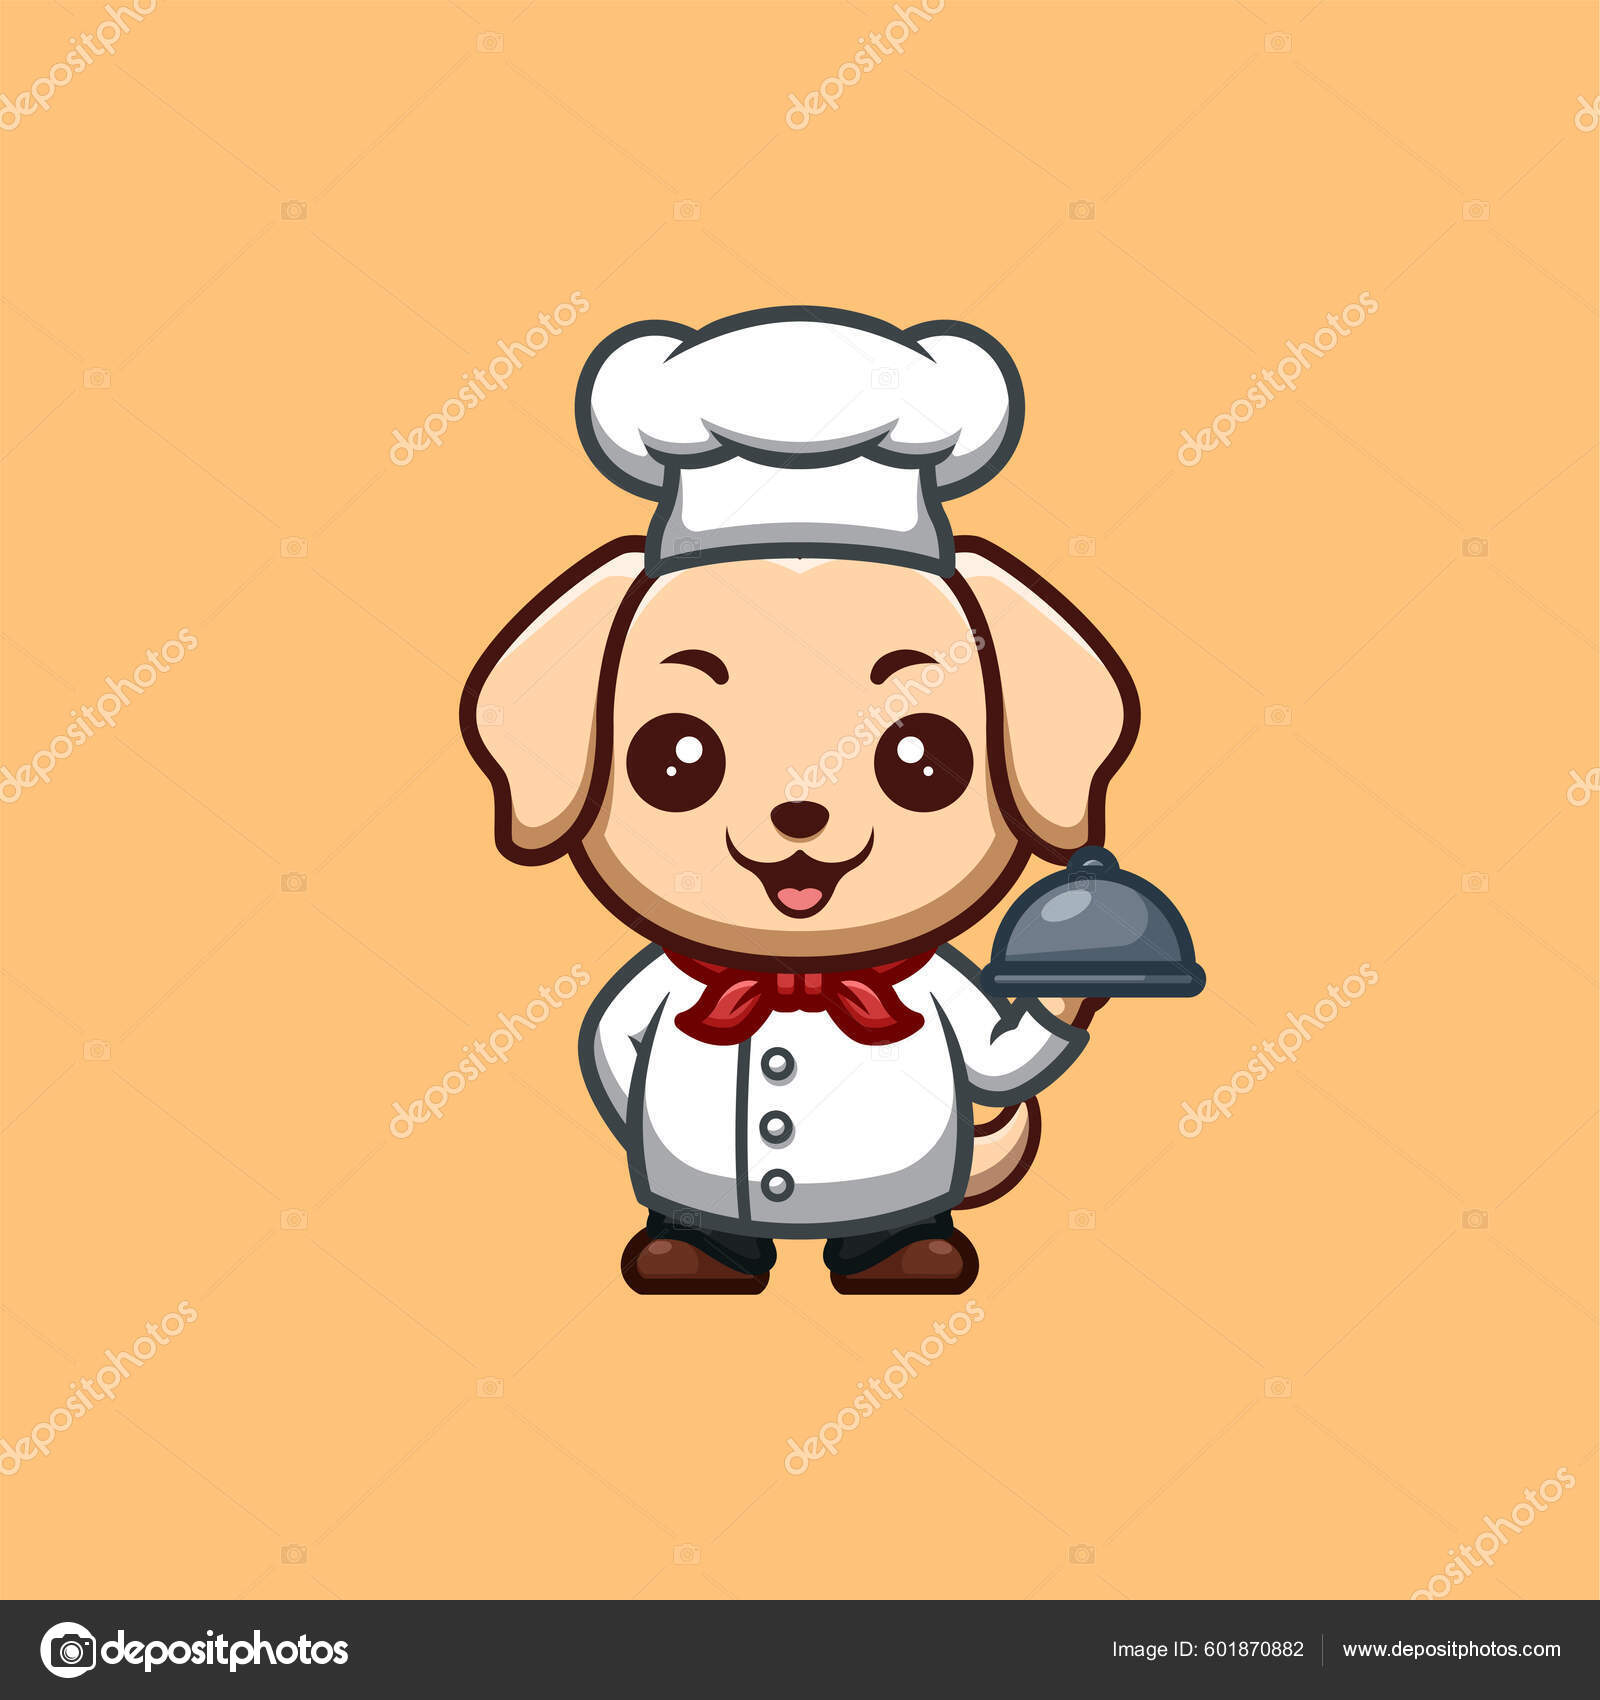 Cute kawaii head pig mascot cartoon logo design icon illustration